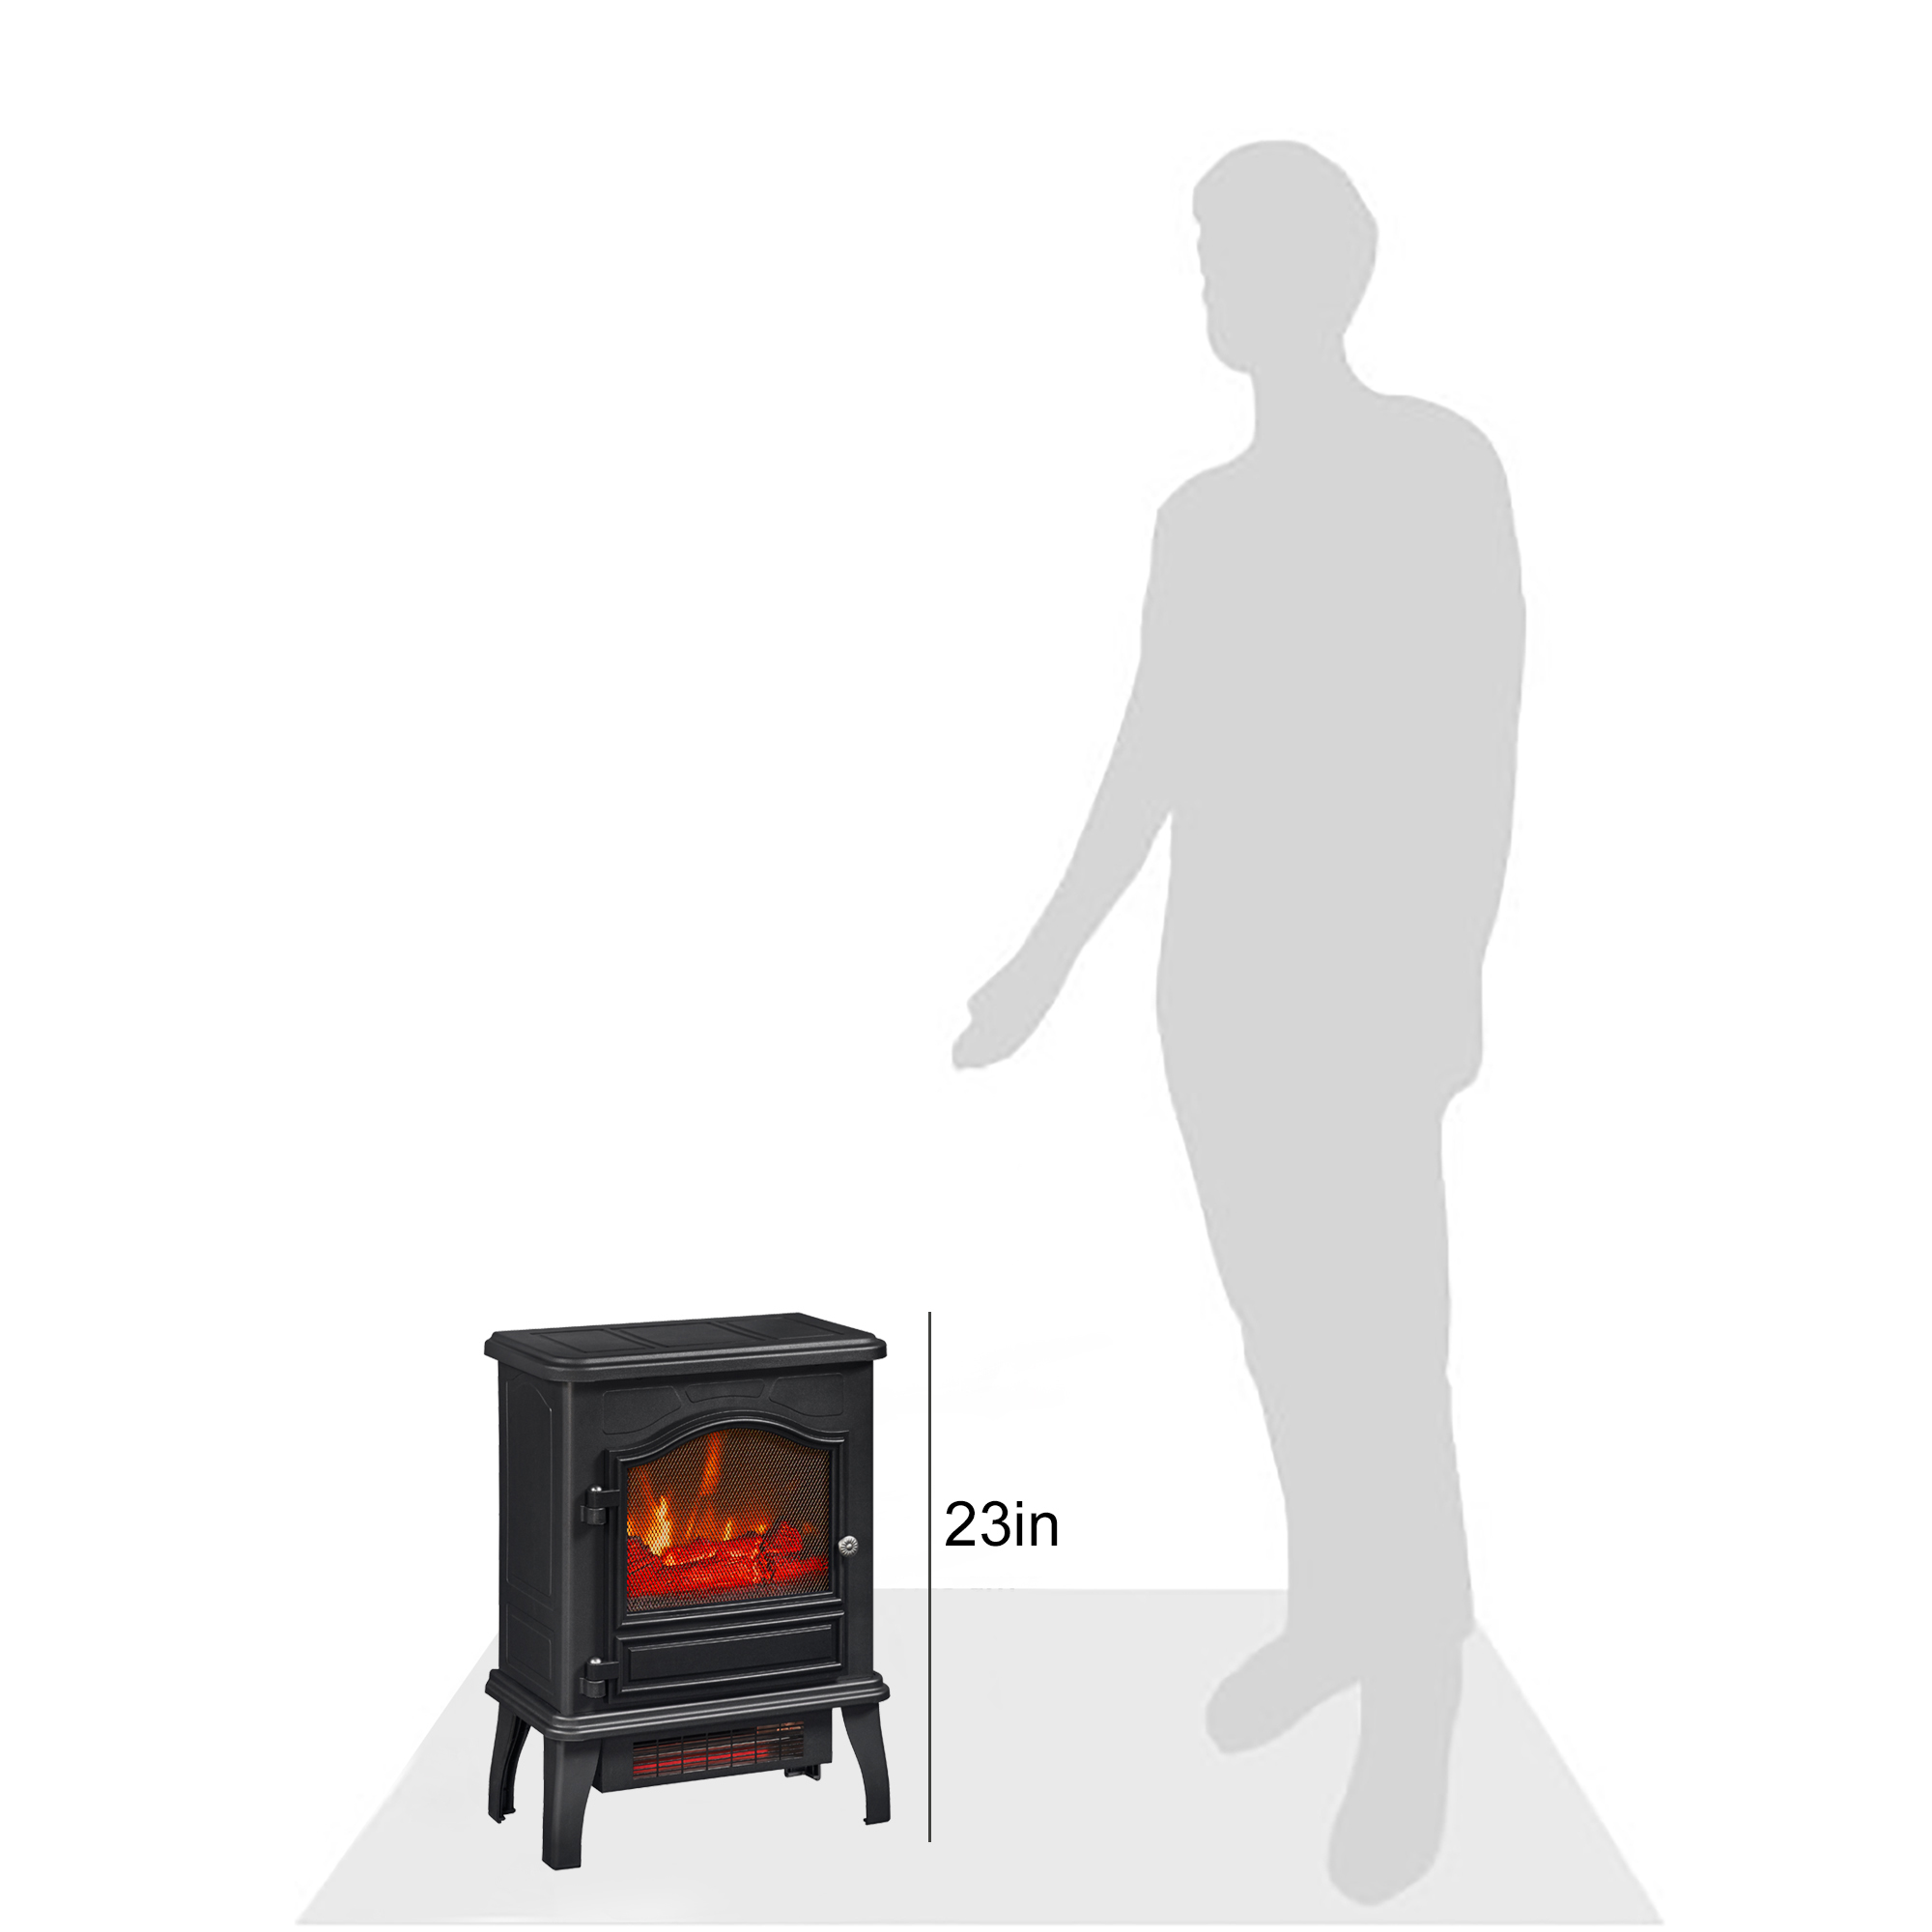 ChimneyFree Powerheat Infrared Quartz Electric Stove Heater, 1500W, Black - image 14 of 15